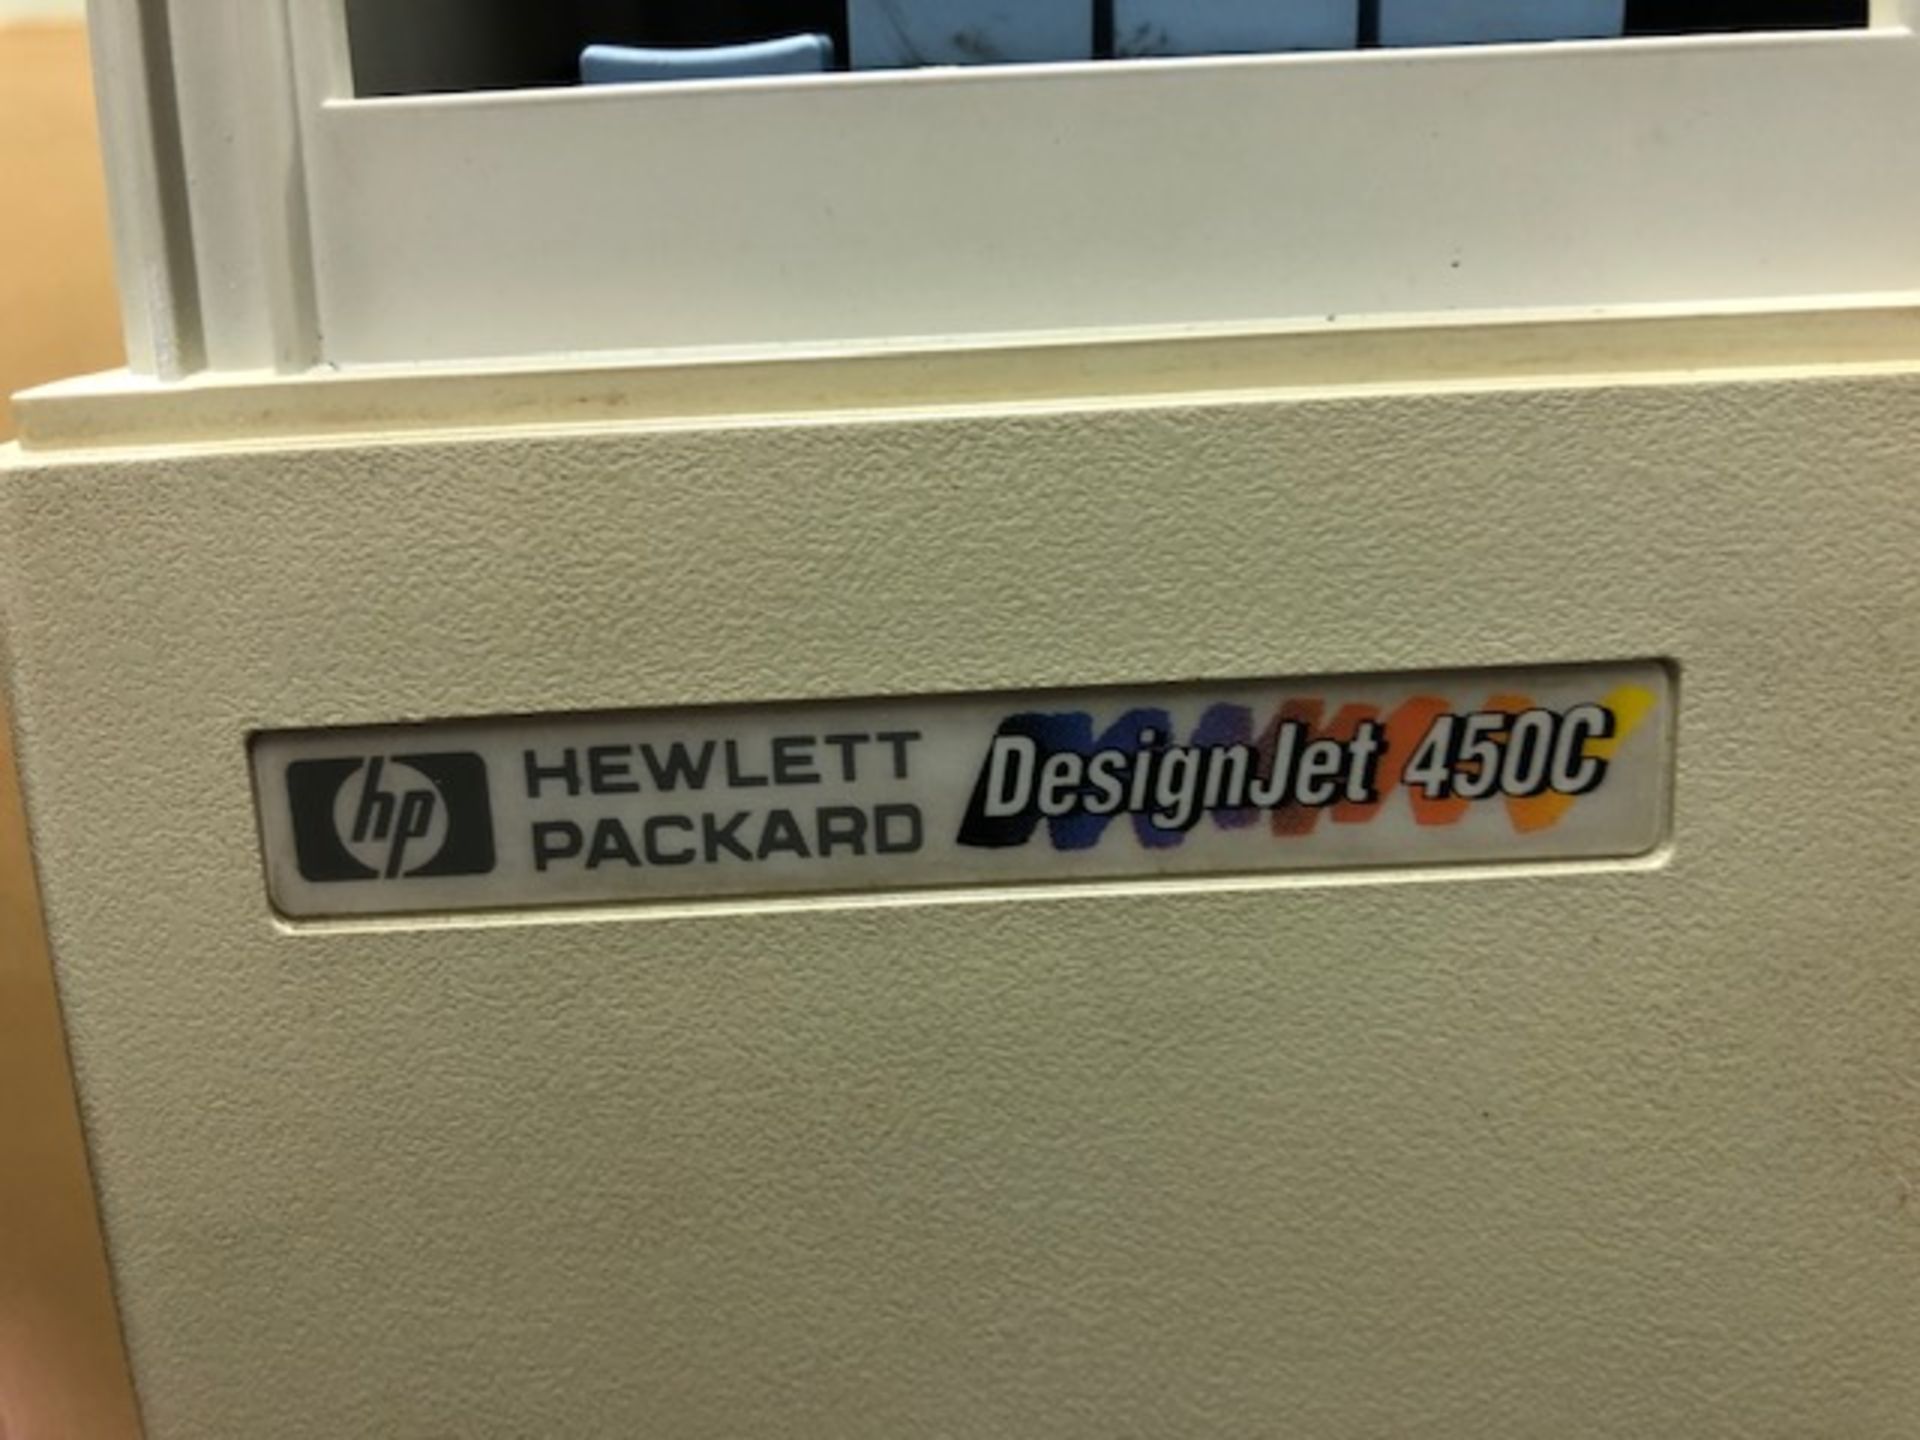 Hewlit Packard Model 450C Design Jet Copier, Approx 53" x 27" x 46" H - Image 3 of 6